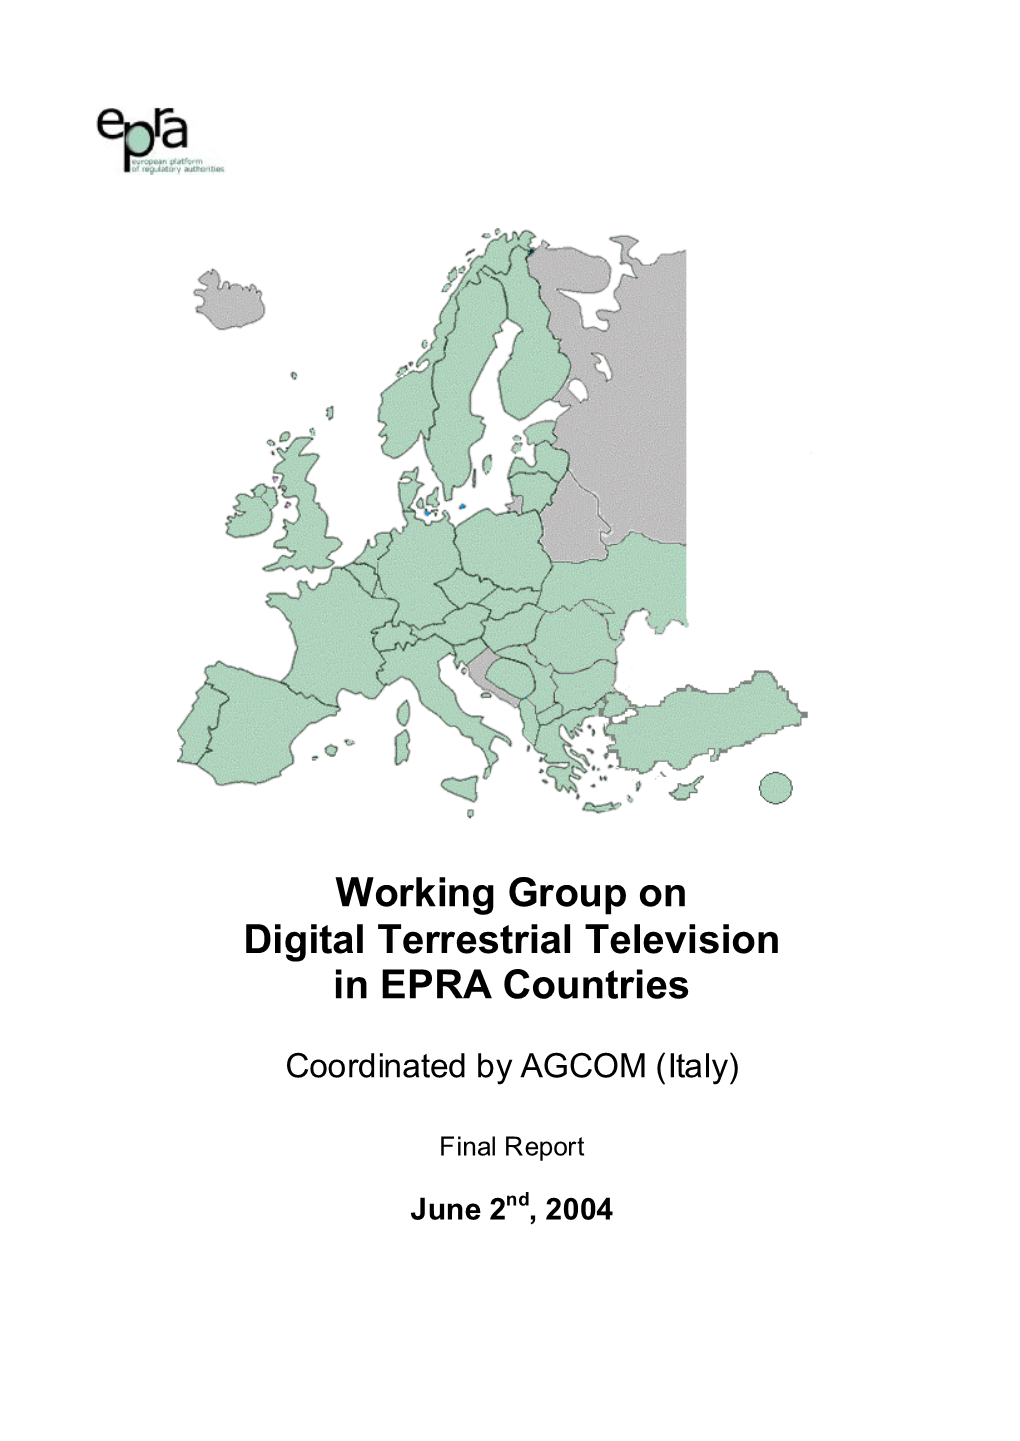 Working Group on Digital Terrestrial Television in EPRA Countries